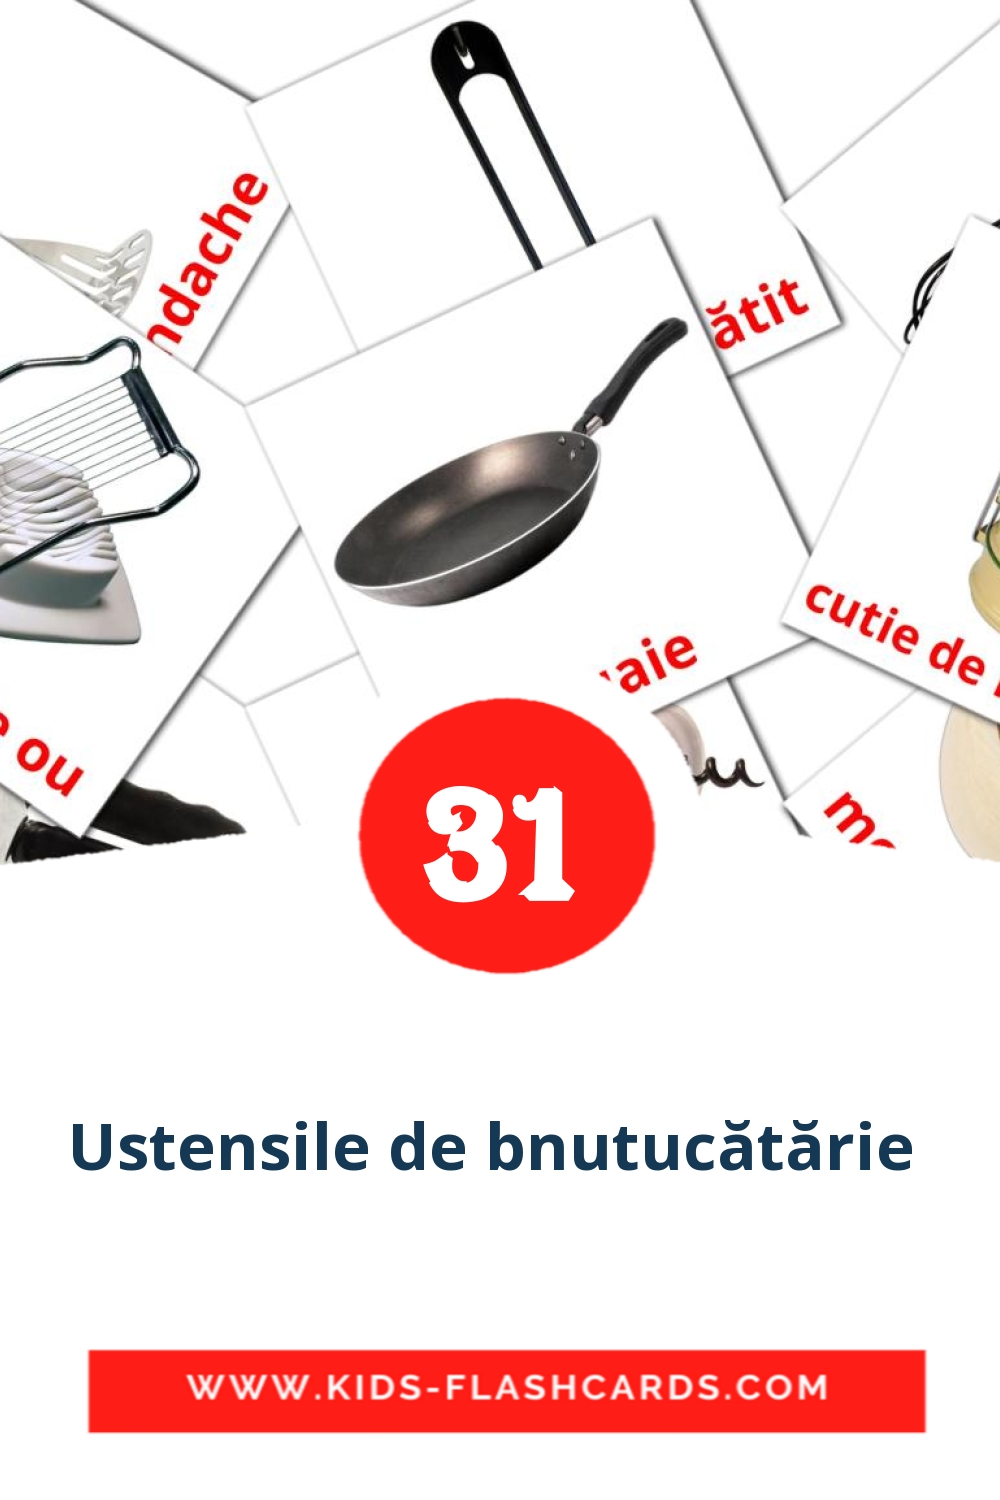 Ustensile de bnutucătărie  на румынском для Детского Сада (31 карточка)